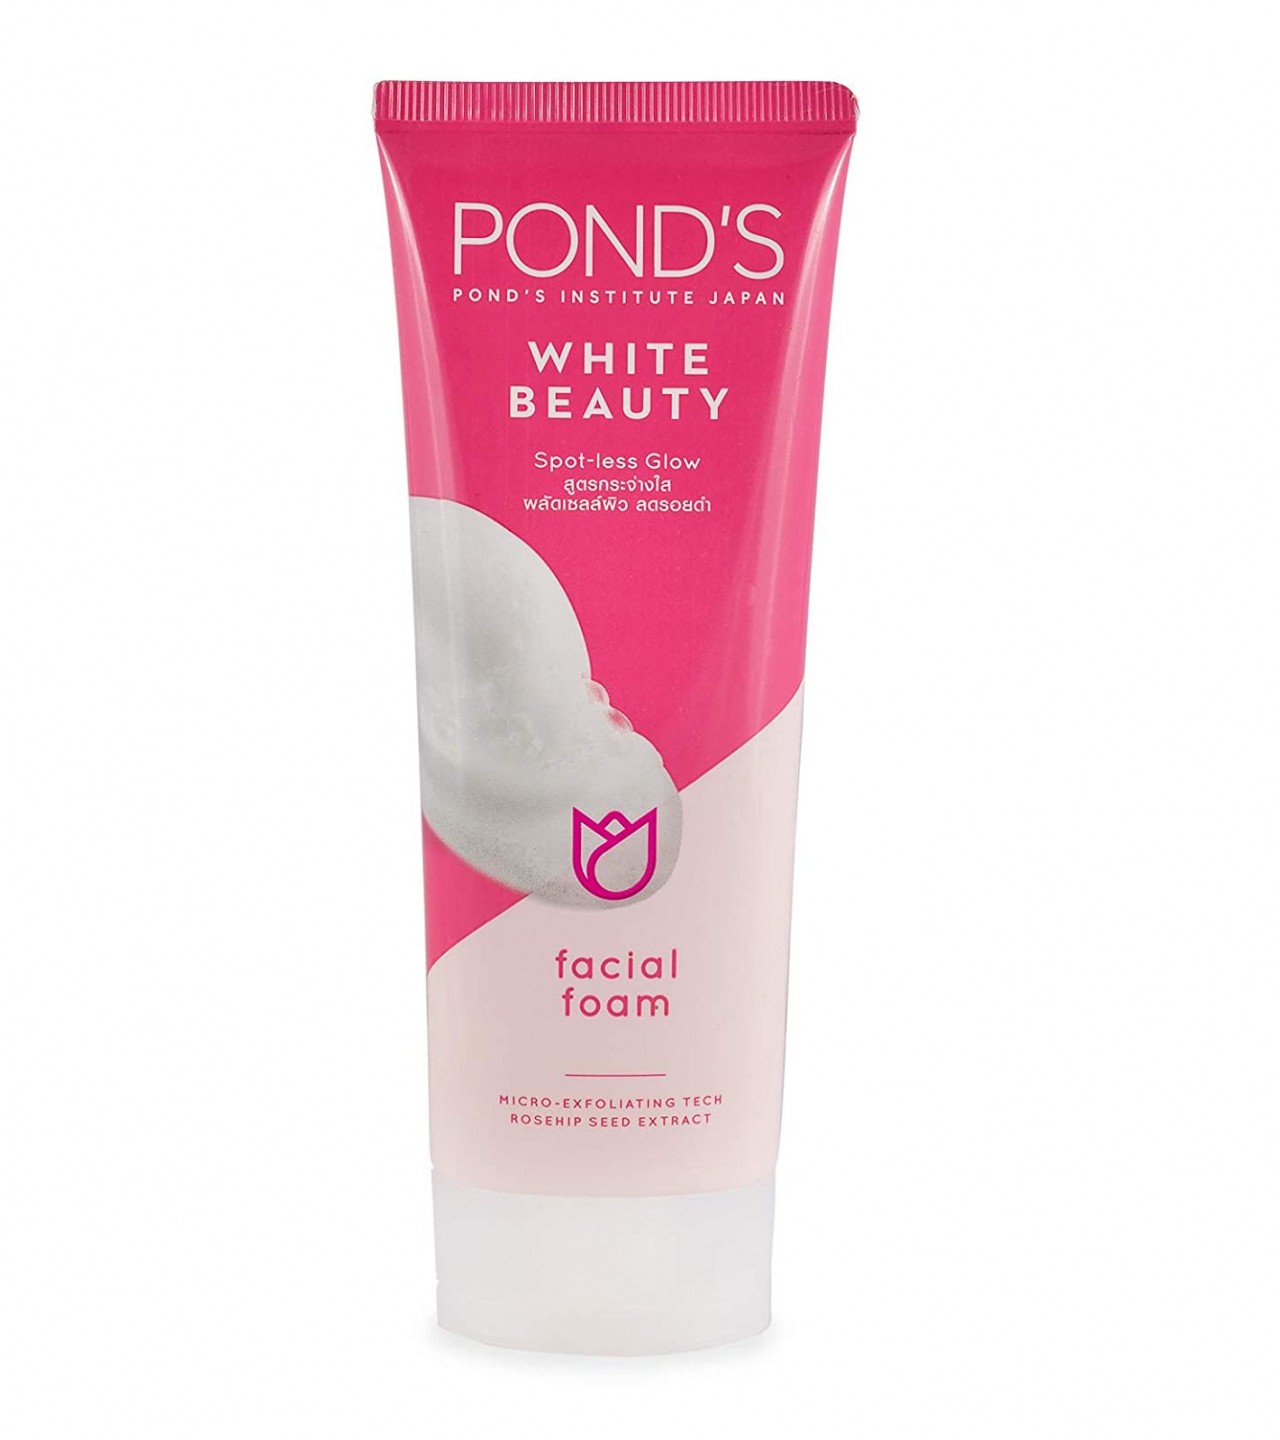 Pond's white beauty facial foam